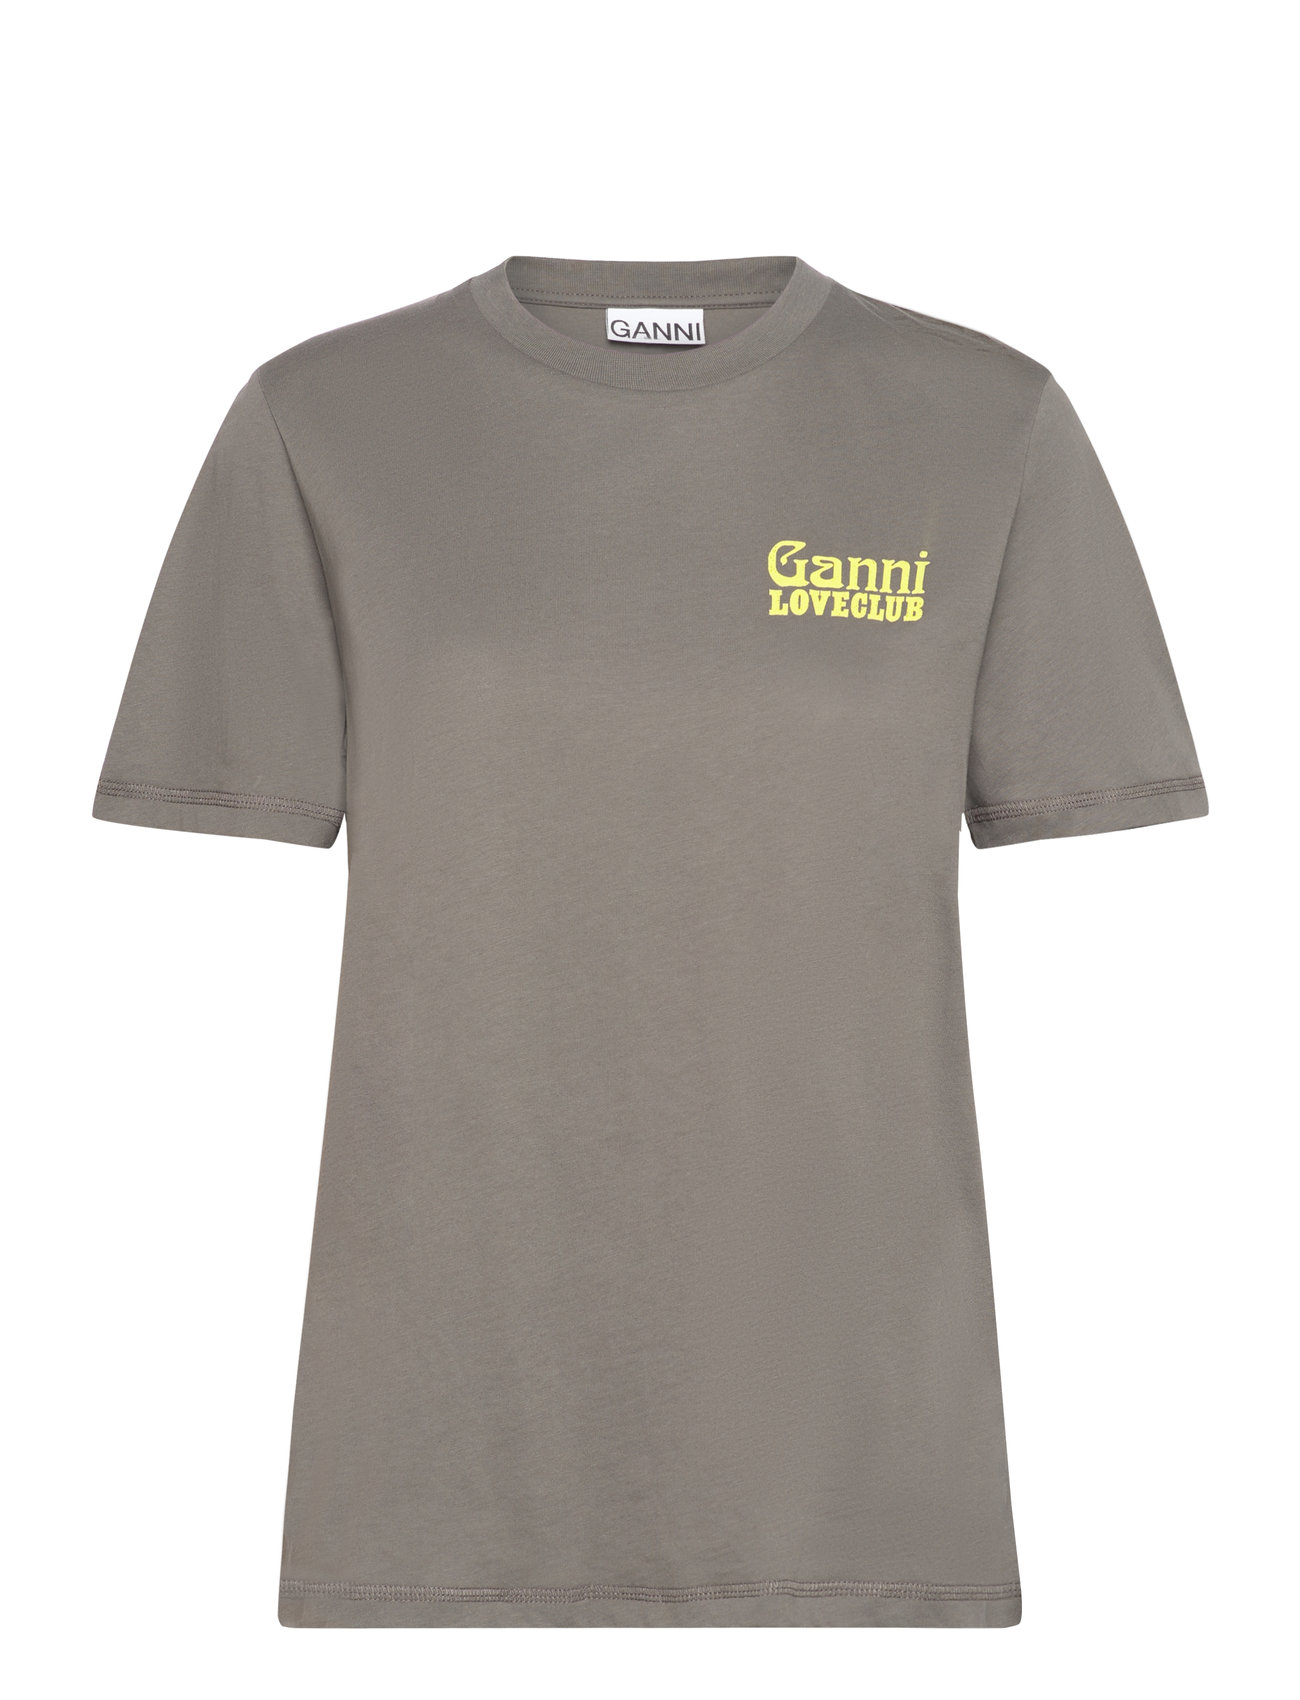 Thin Jersey Designers T-shirts & Tops Short-sleeved Khaki Green Ganni